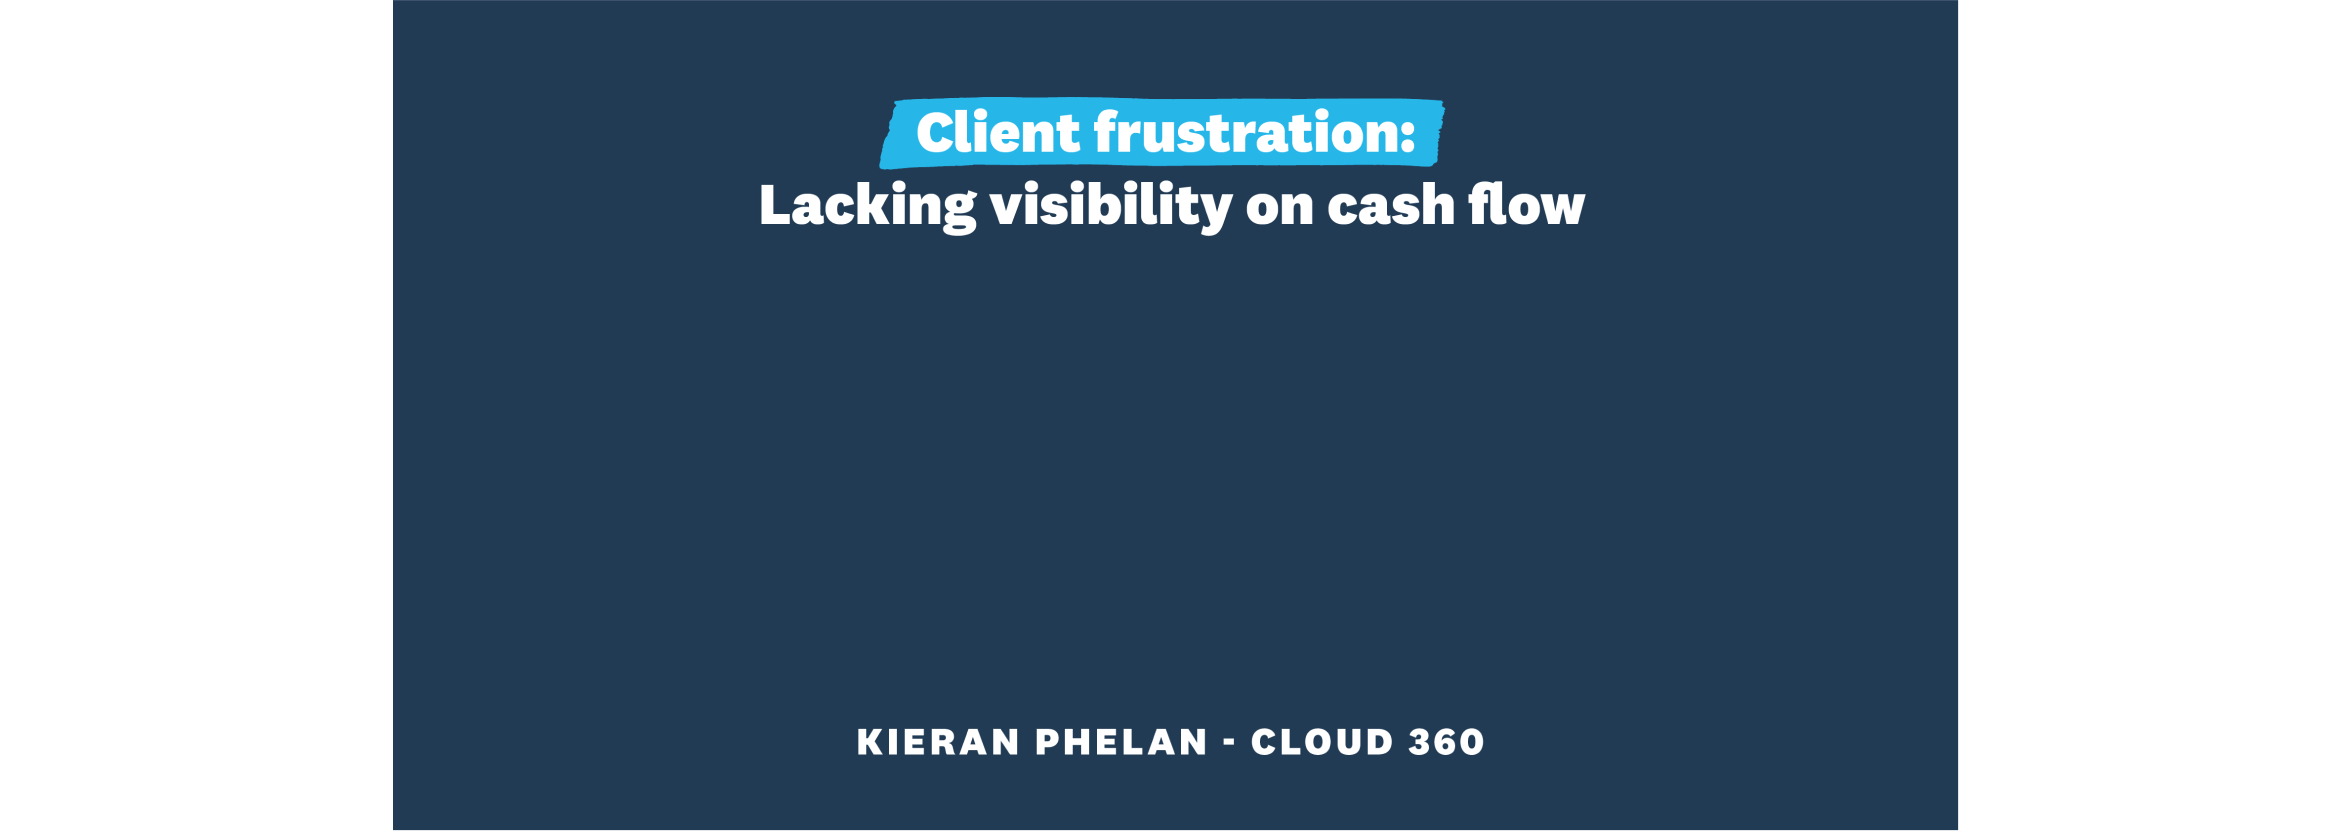 Client frustration: Lacking visibility on cash flow